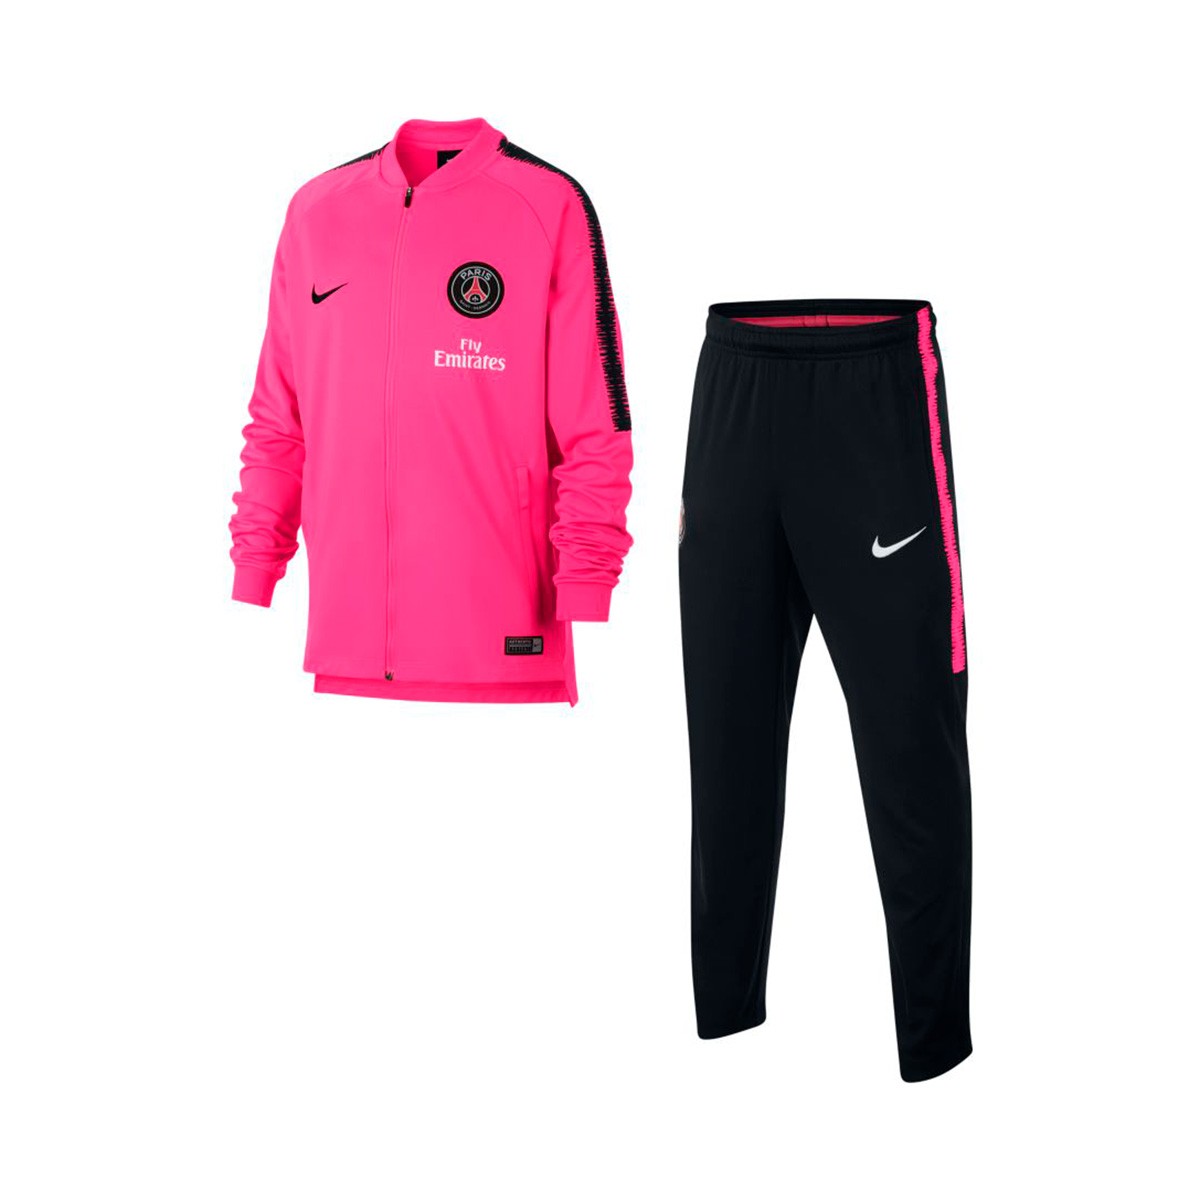 Chándal Nike Saint-Germain 2018-2019 Hyper pink-Black - Fútbol Emotion